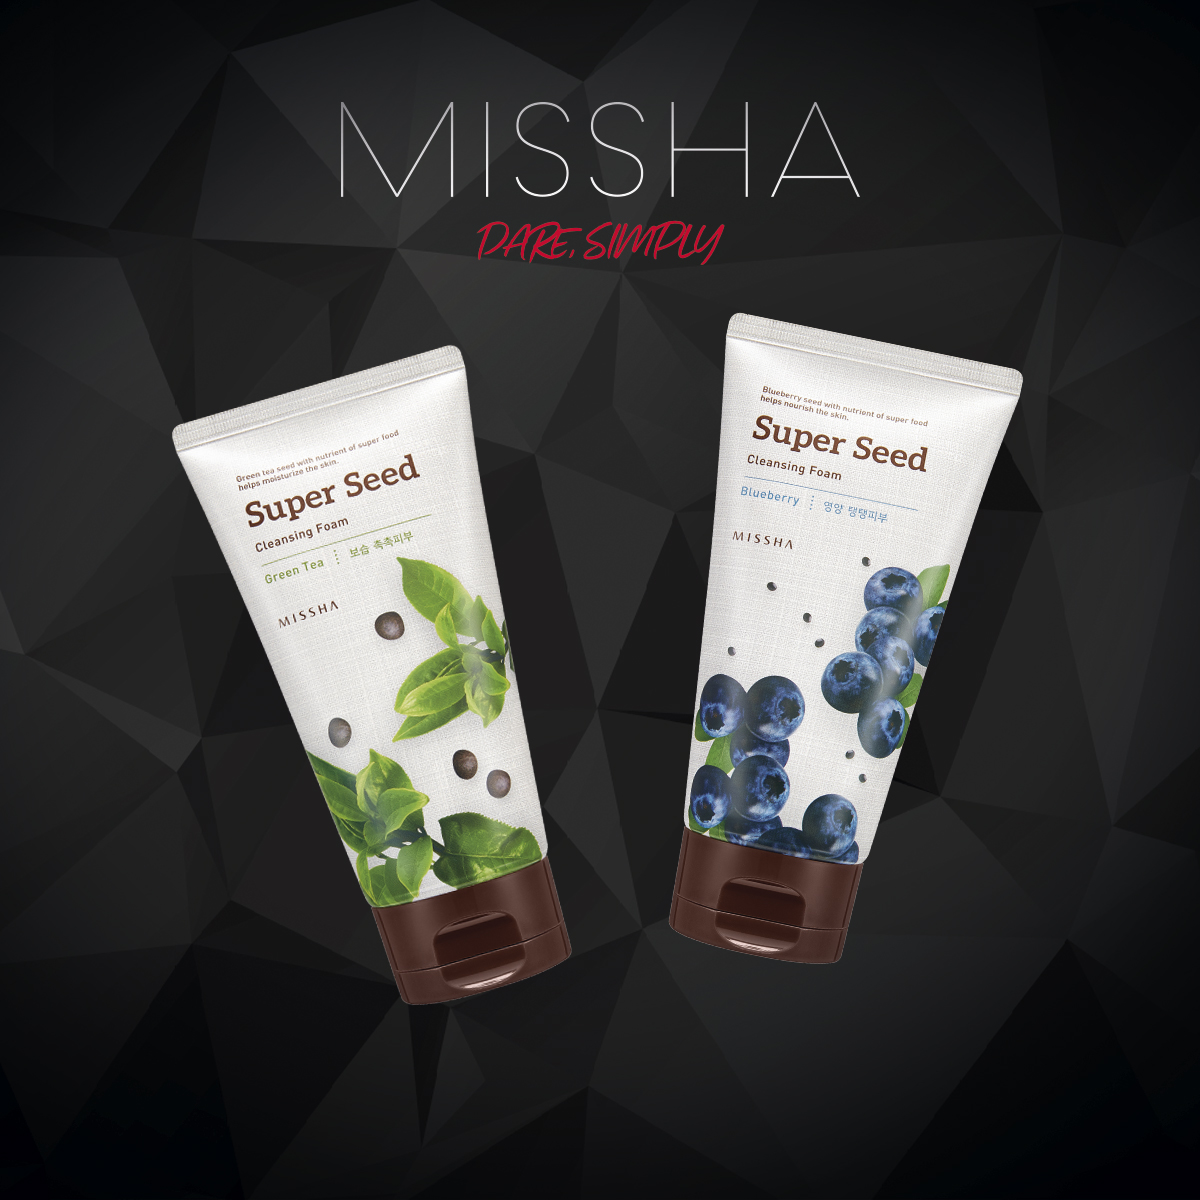 Missha-Super-Seed-1200x1200